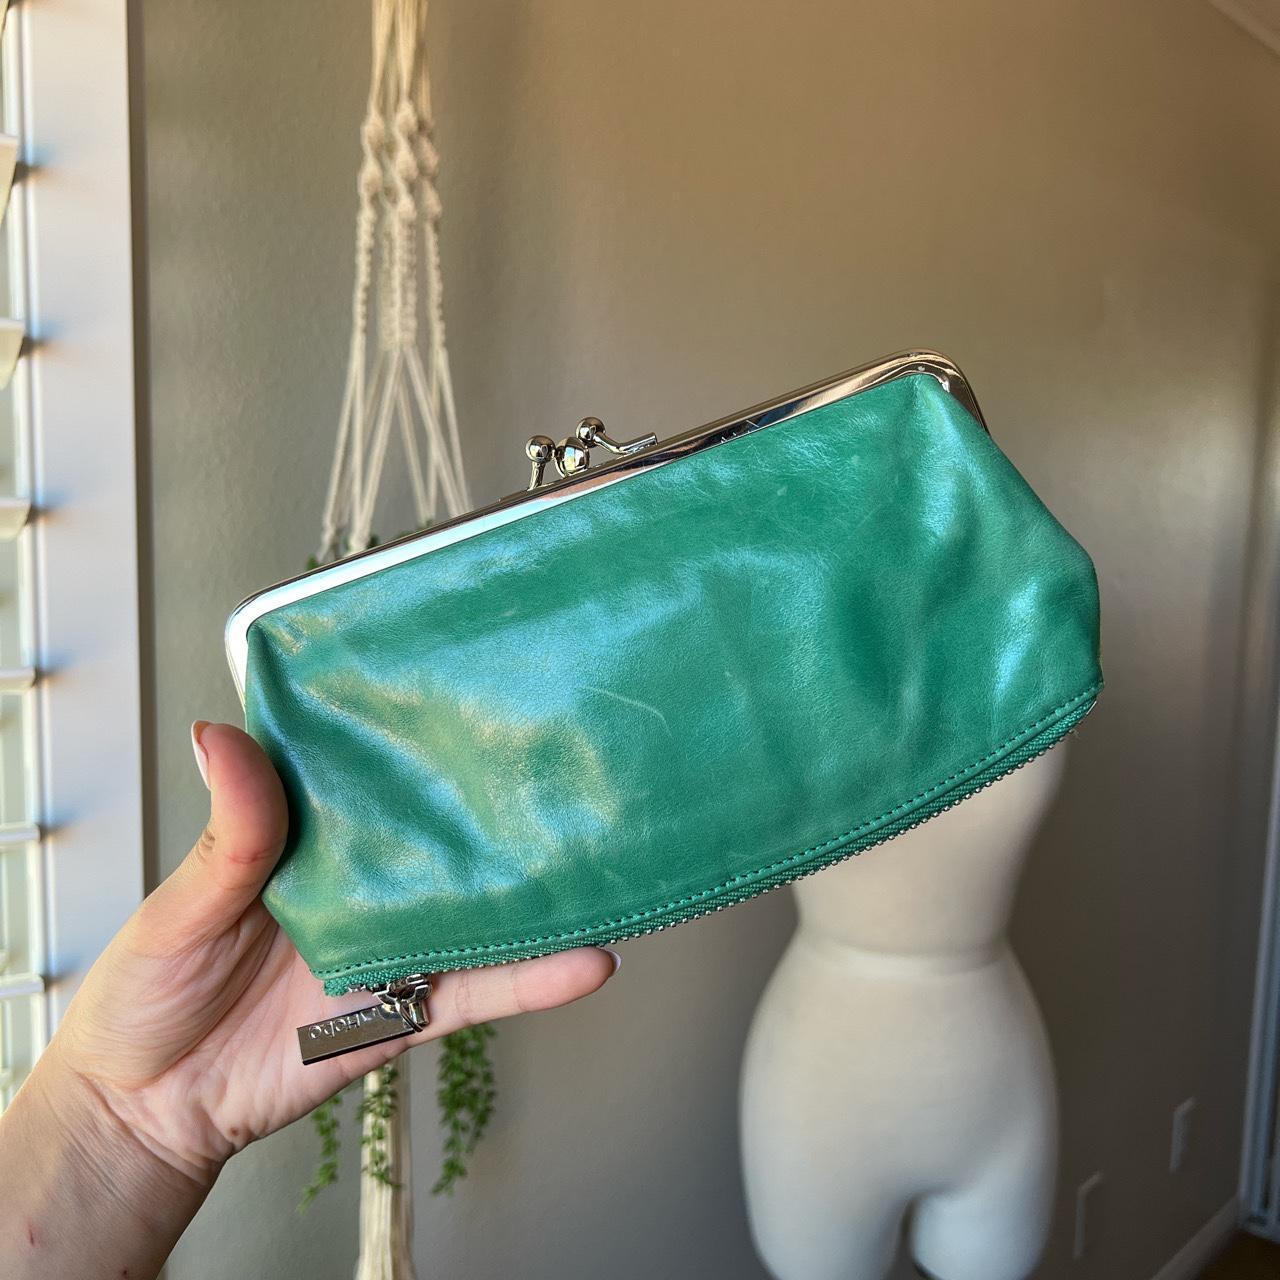 Rhinestone Purses for Women Chic Sparkly Evening Handbag Bling Hobo Bag  Shiny Silver Clutch Purse for Party | Silver clutch purse, Sparkly bag,  Sparkly handbag